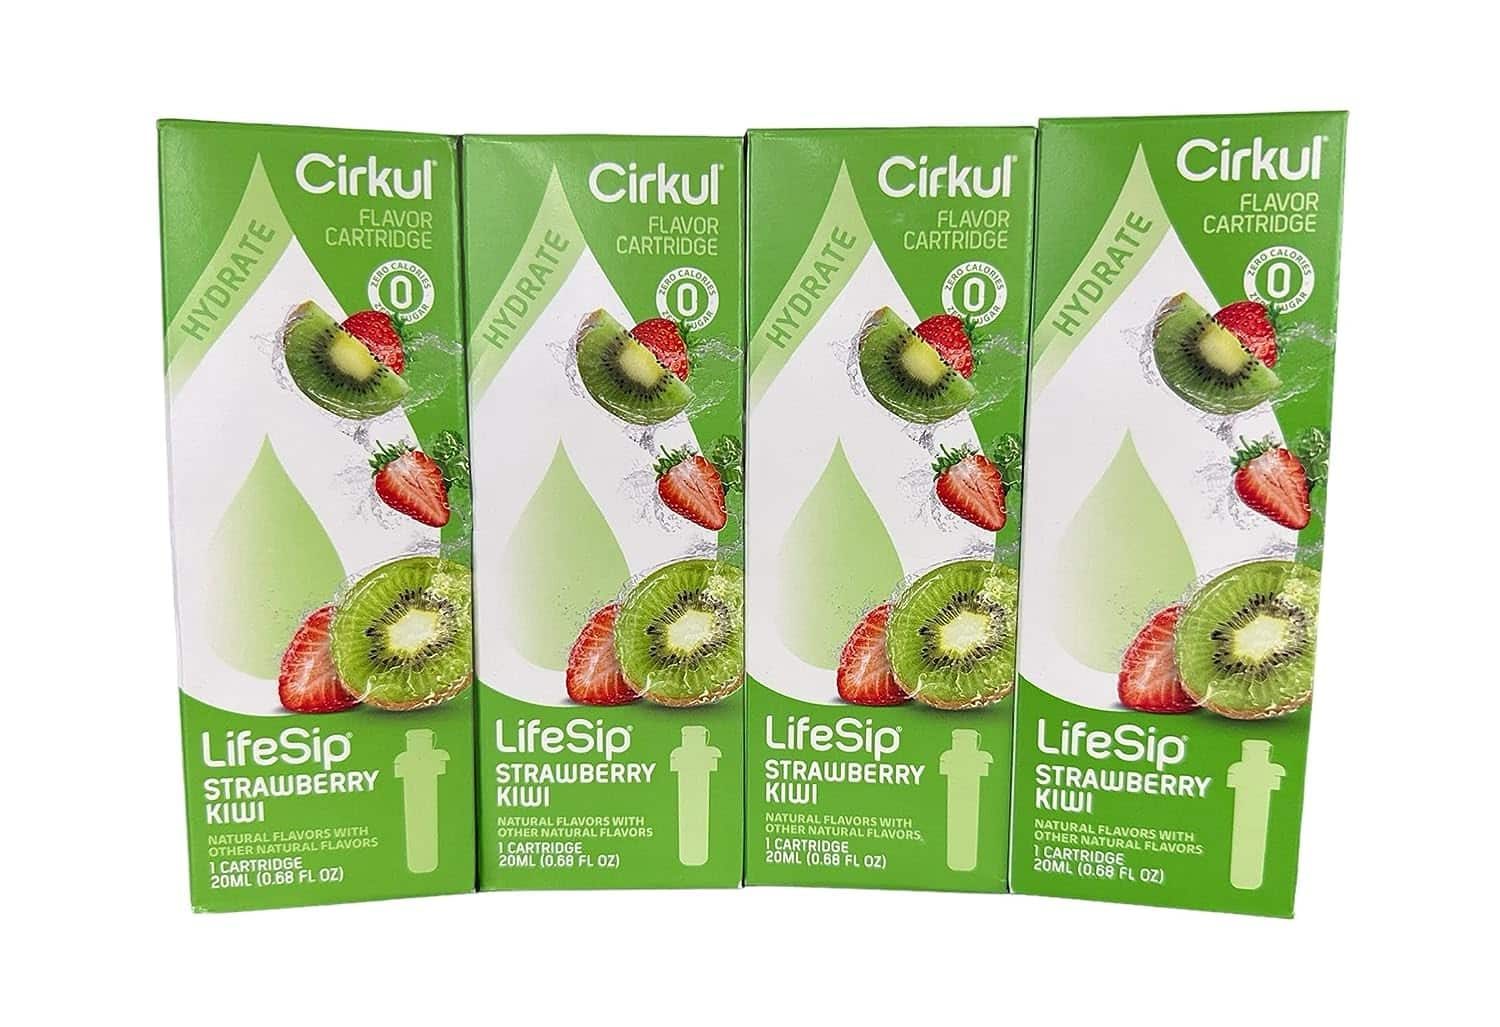 Cirkul flavor kiwi